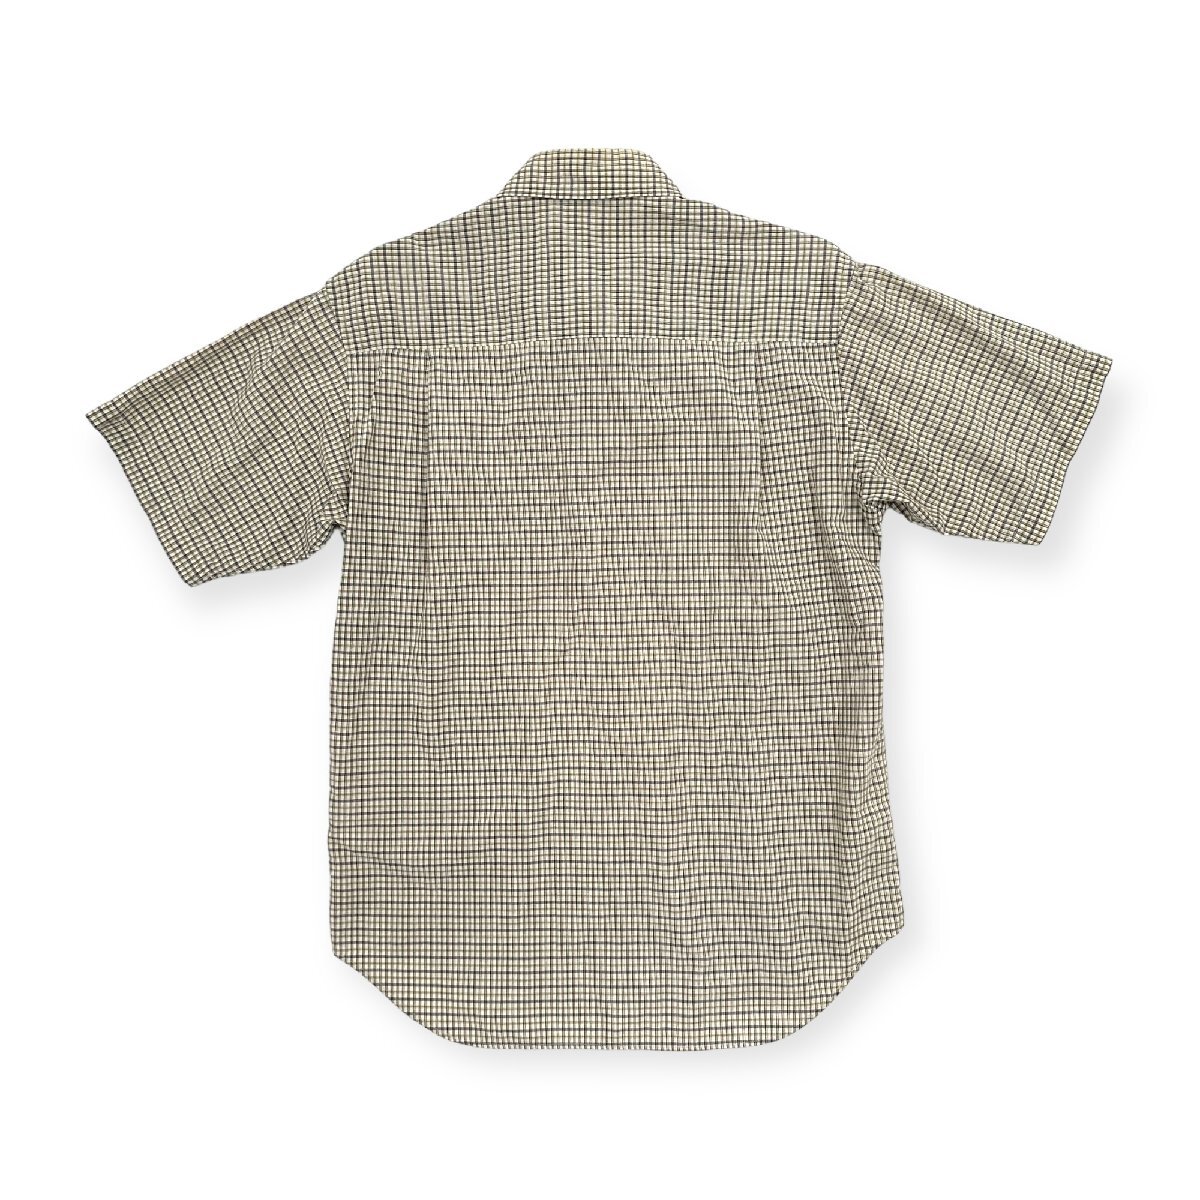 Crocodile クロコダイル チェック柄 リネン混 半袖シャツ サイズ M/マルチ/メンズ/紳士/麻_画像5